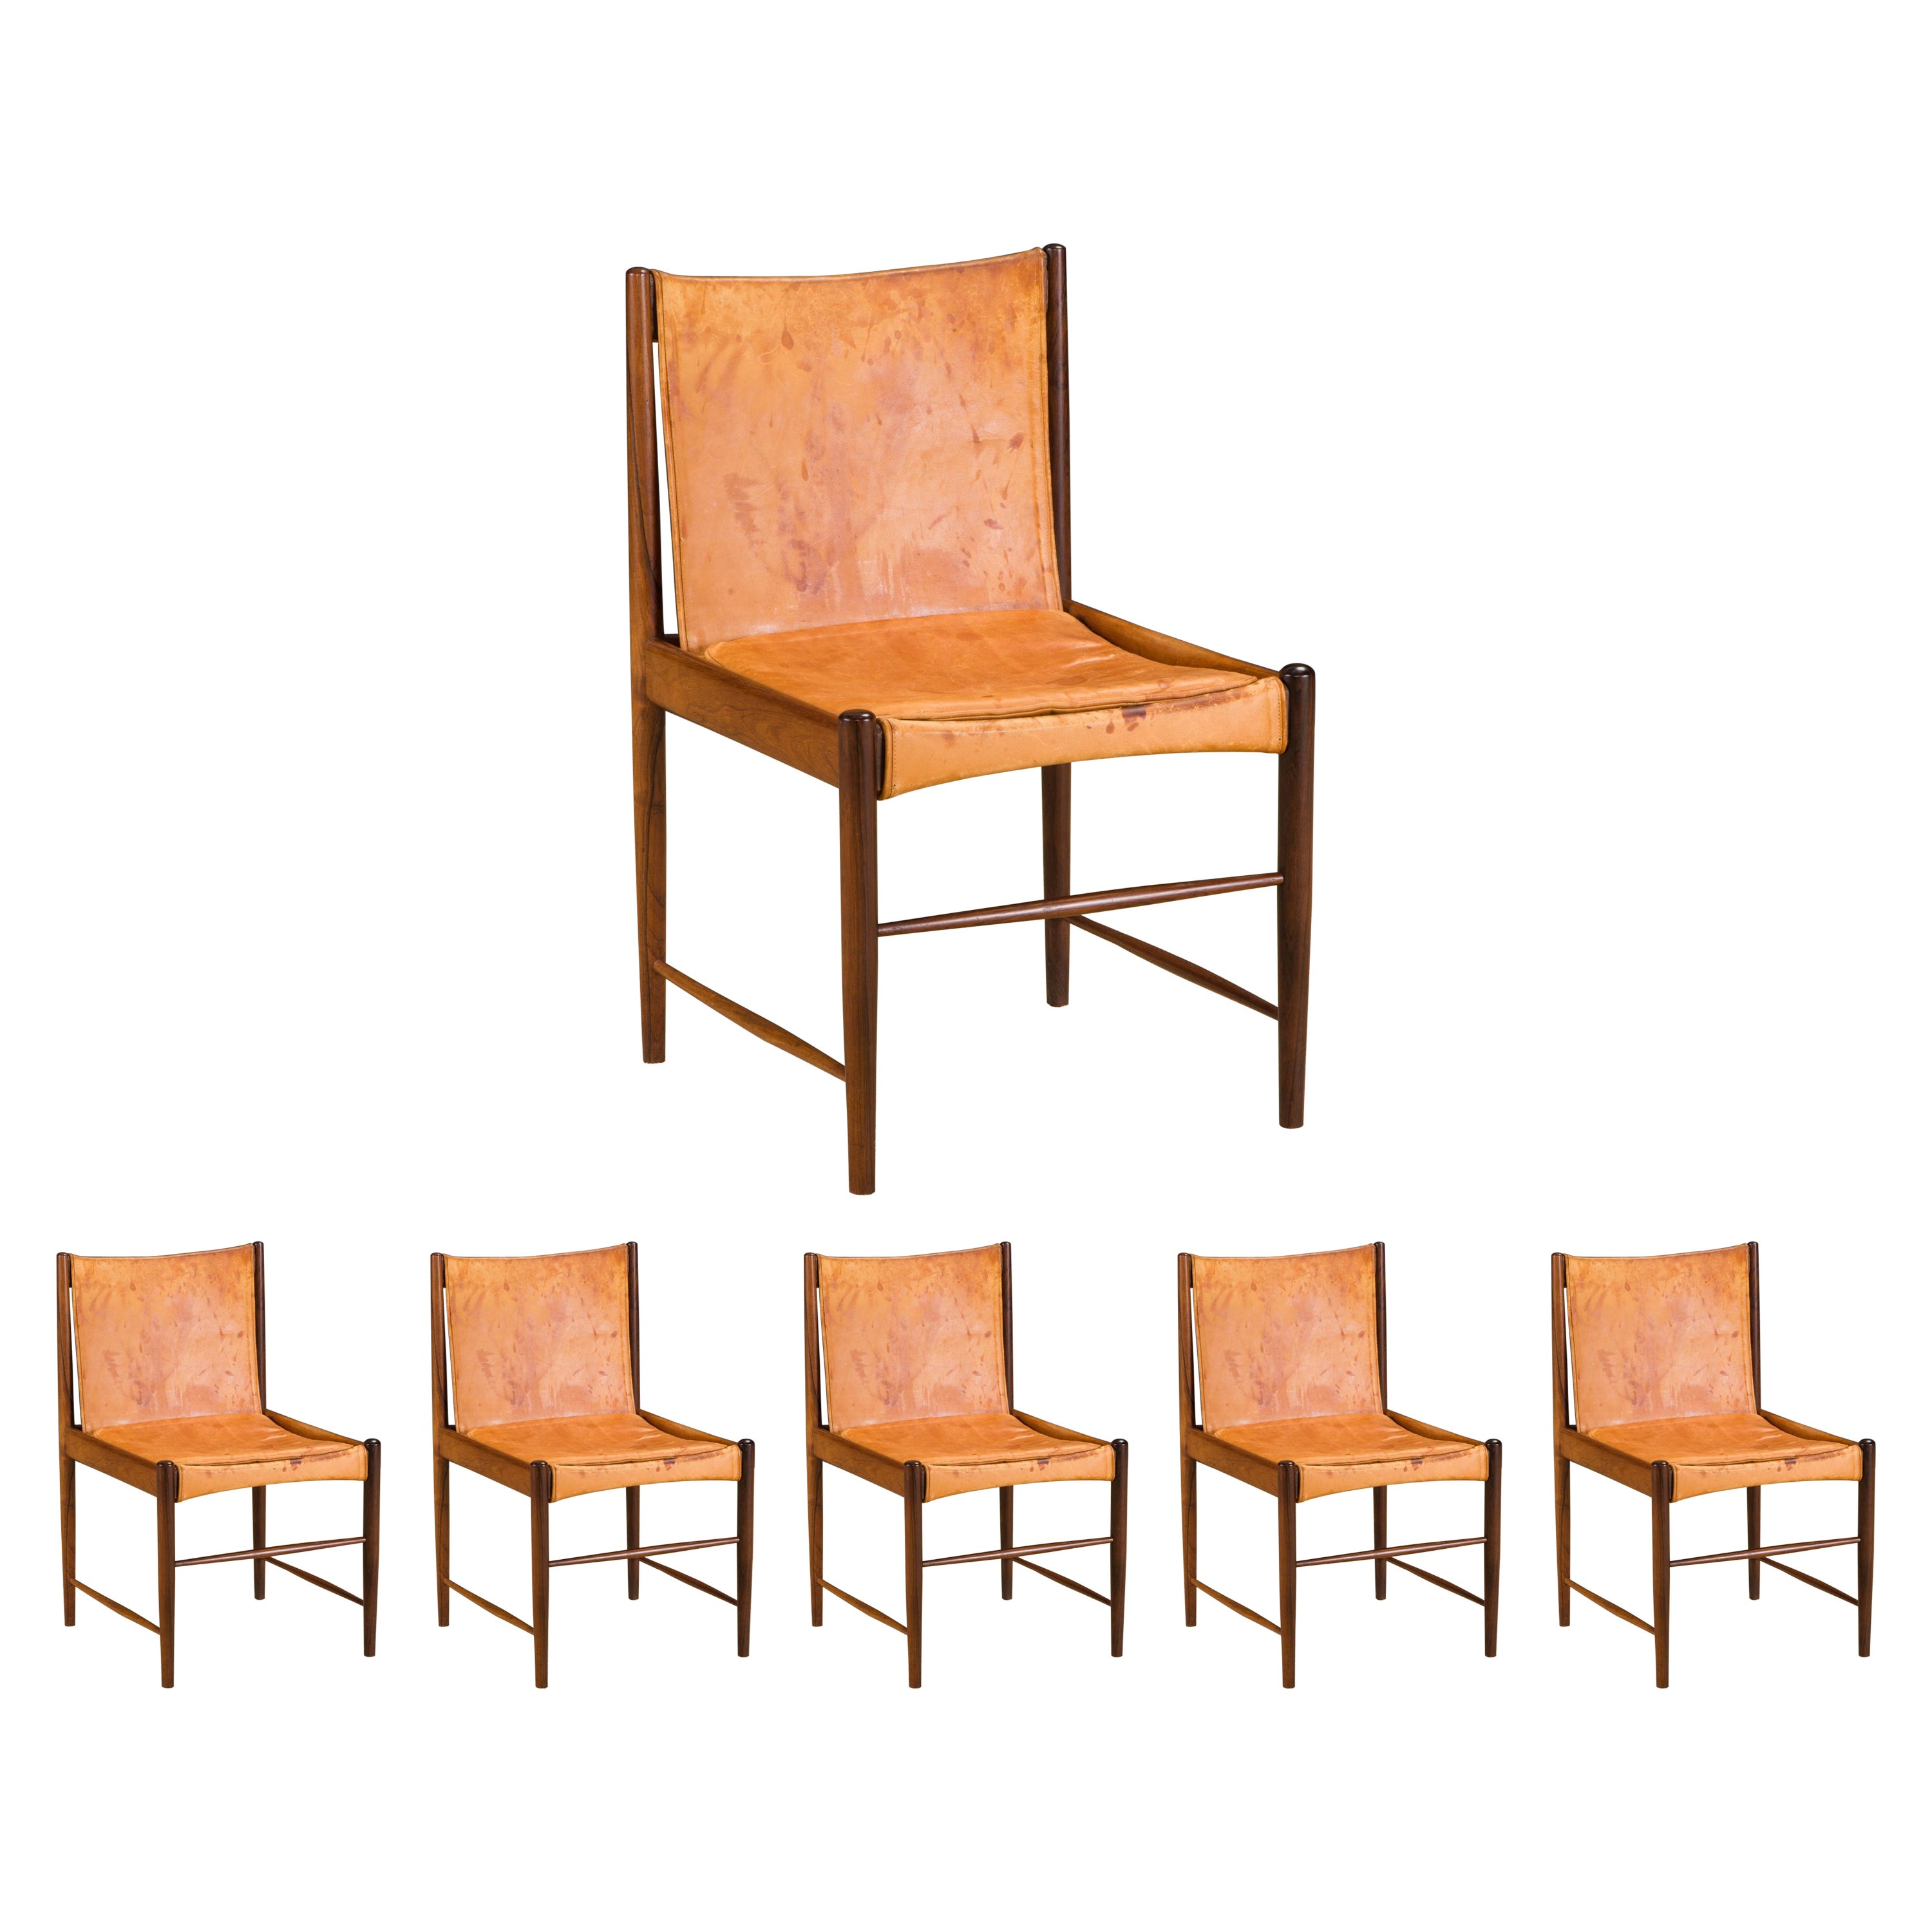 Sergio Rodrigues für Oca Jacaranda & Leder Cantu-Stühle, um 1959, Brasilien, signiert